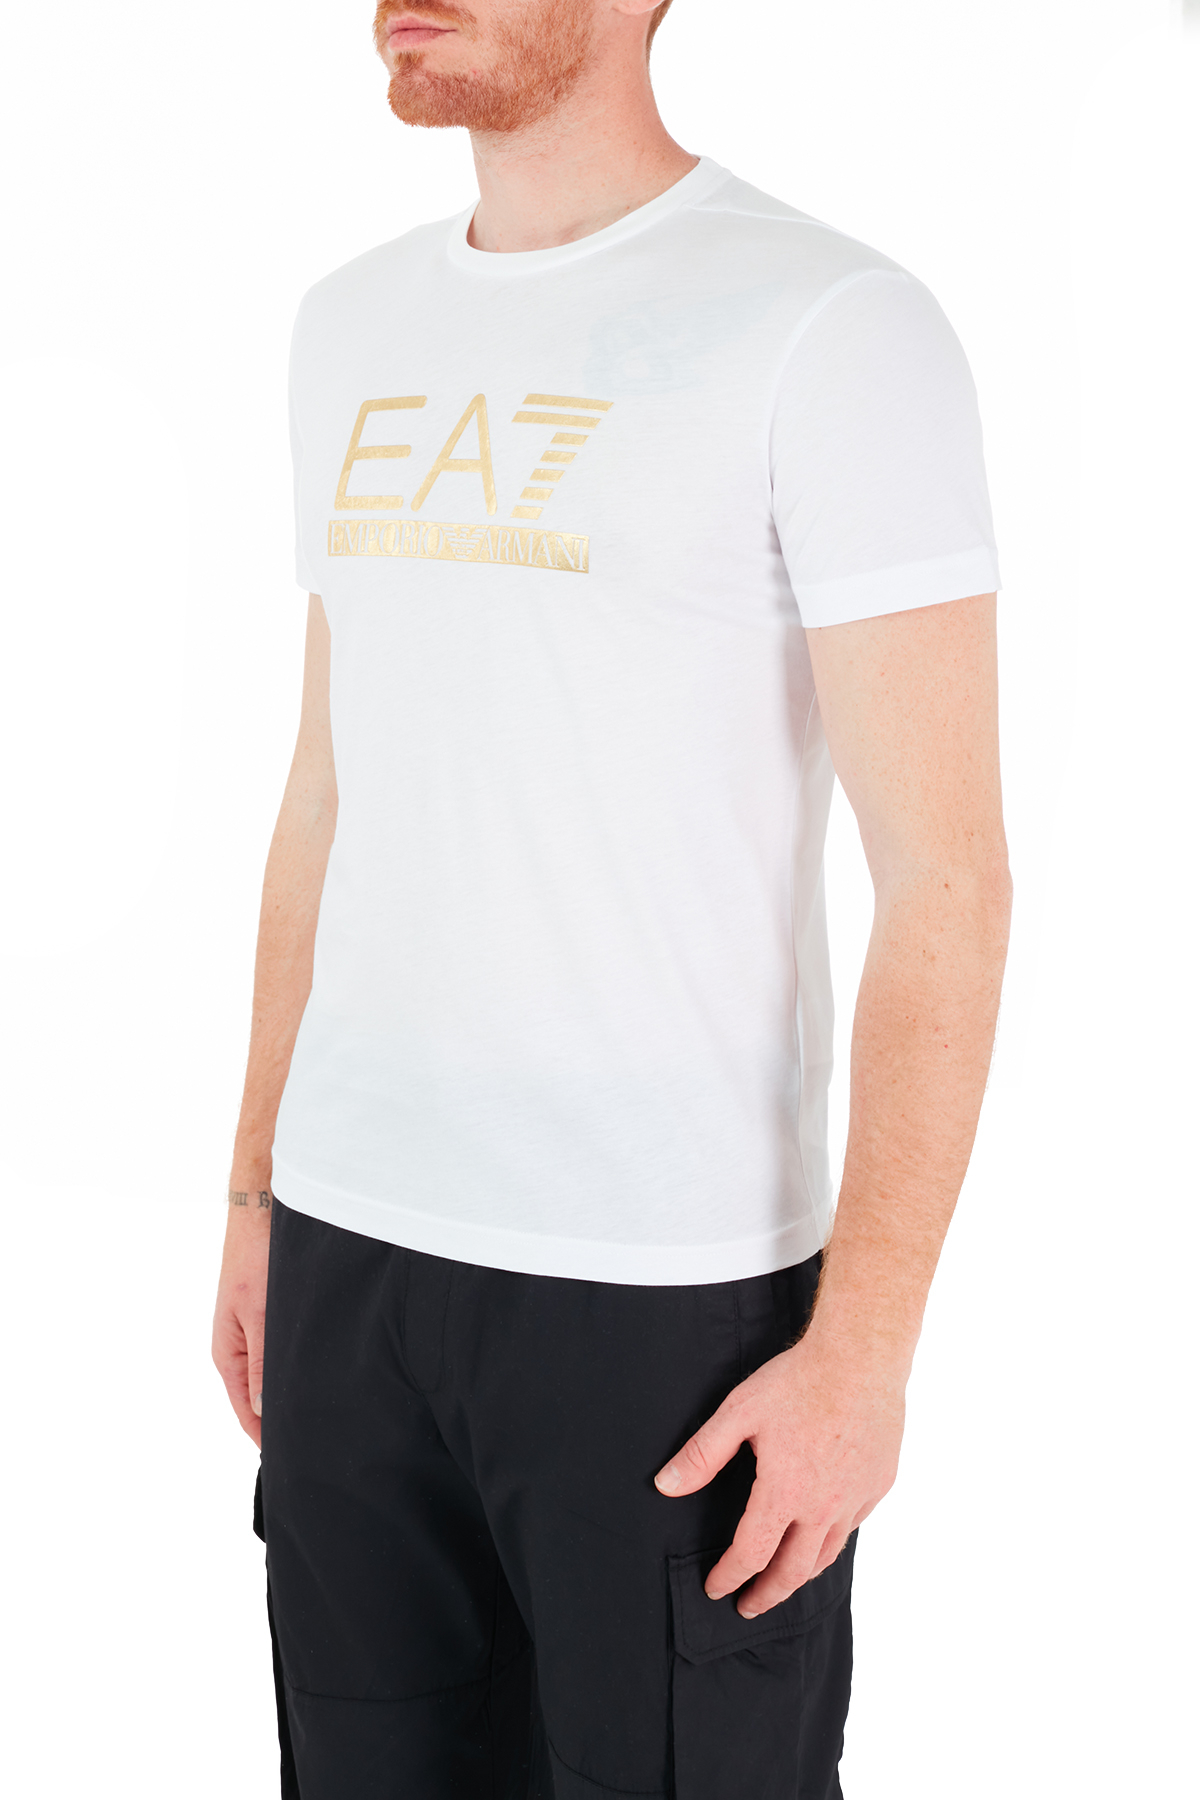 EA7 Logo Baskılı Bisiklet Yaka % 100 Pamuk Erkek T Shirt 3KPT87 PJM9Z 1100 BEYAZ